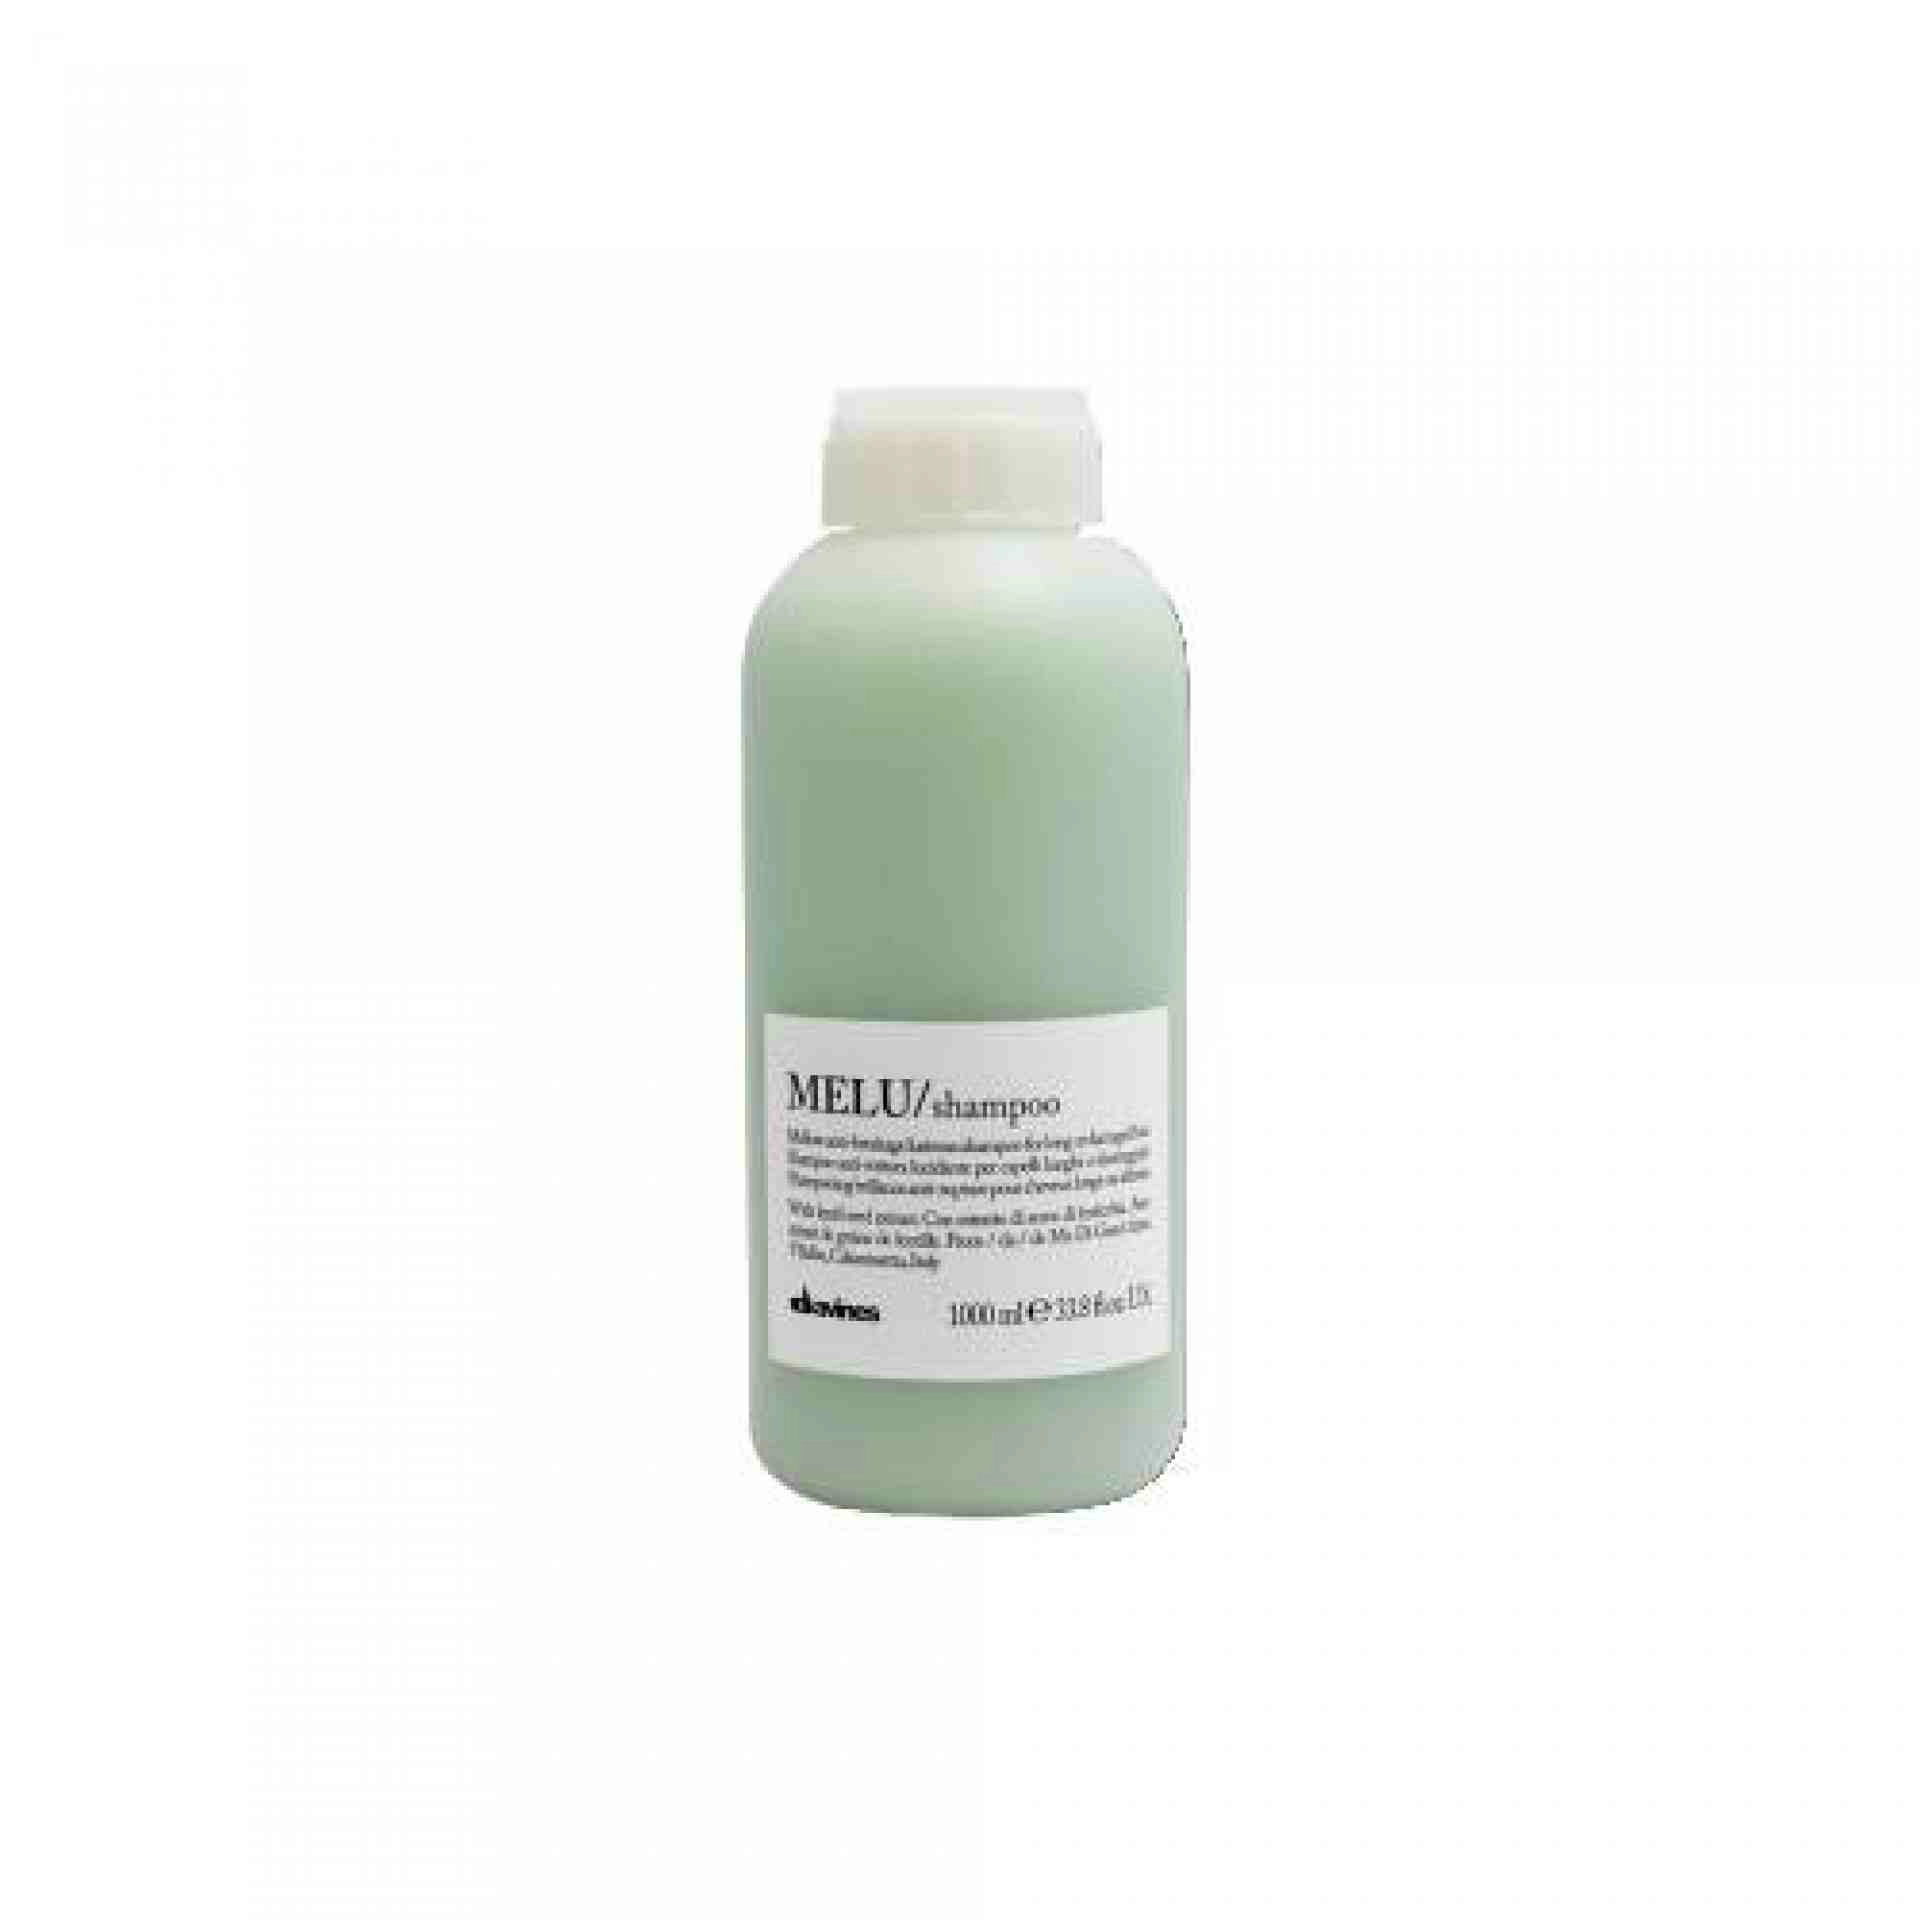 MELU / Shampoo | Champú anti-rotura - Essential Haircare - Davines ®